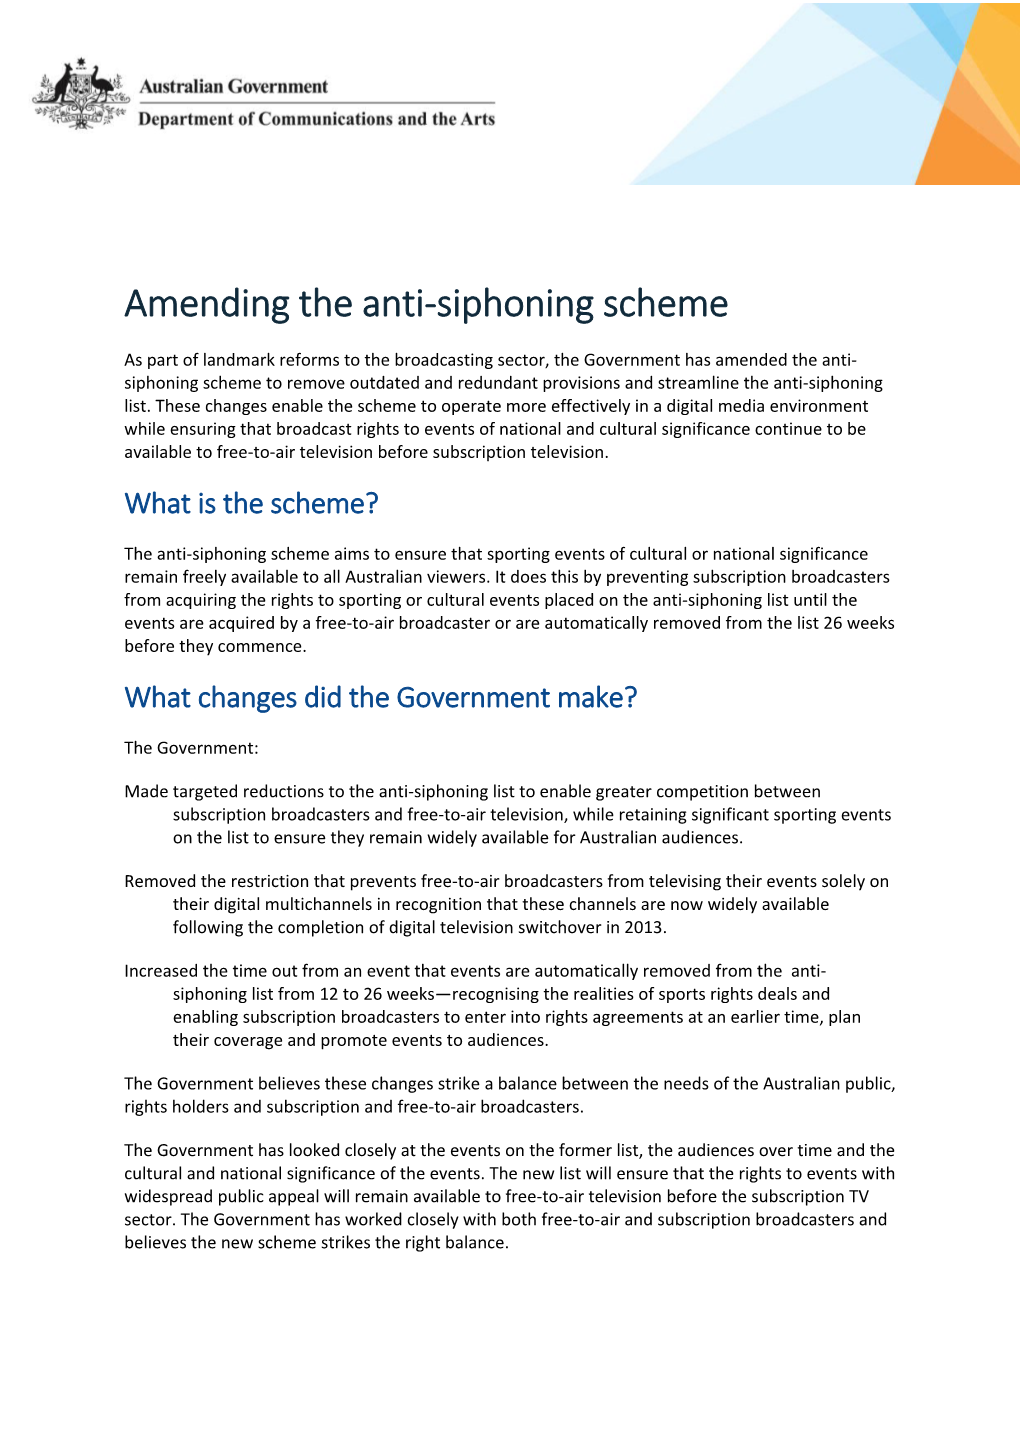 Amending the Anti-Siphoning Scheme